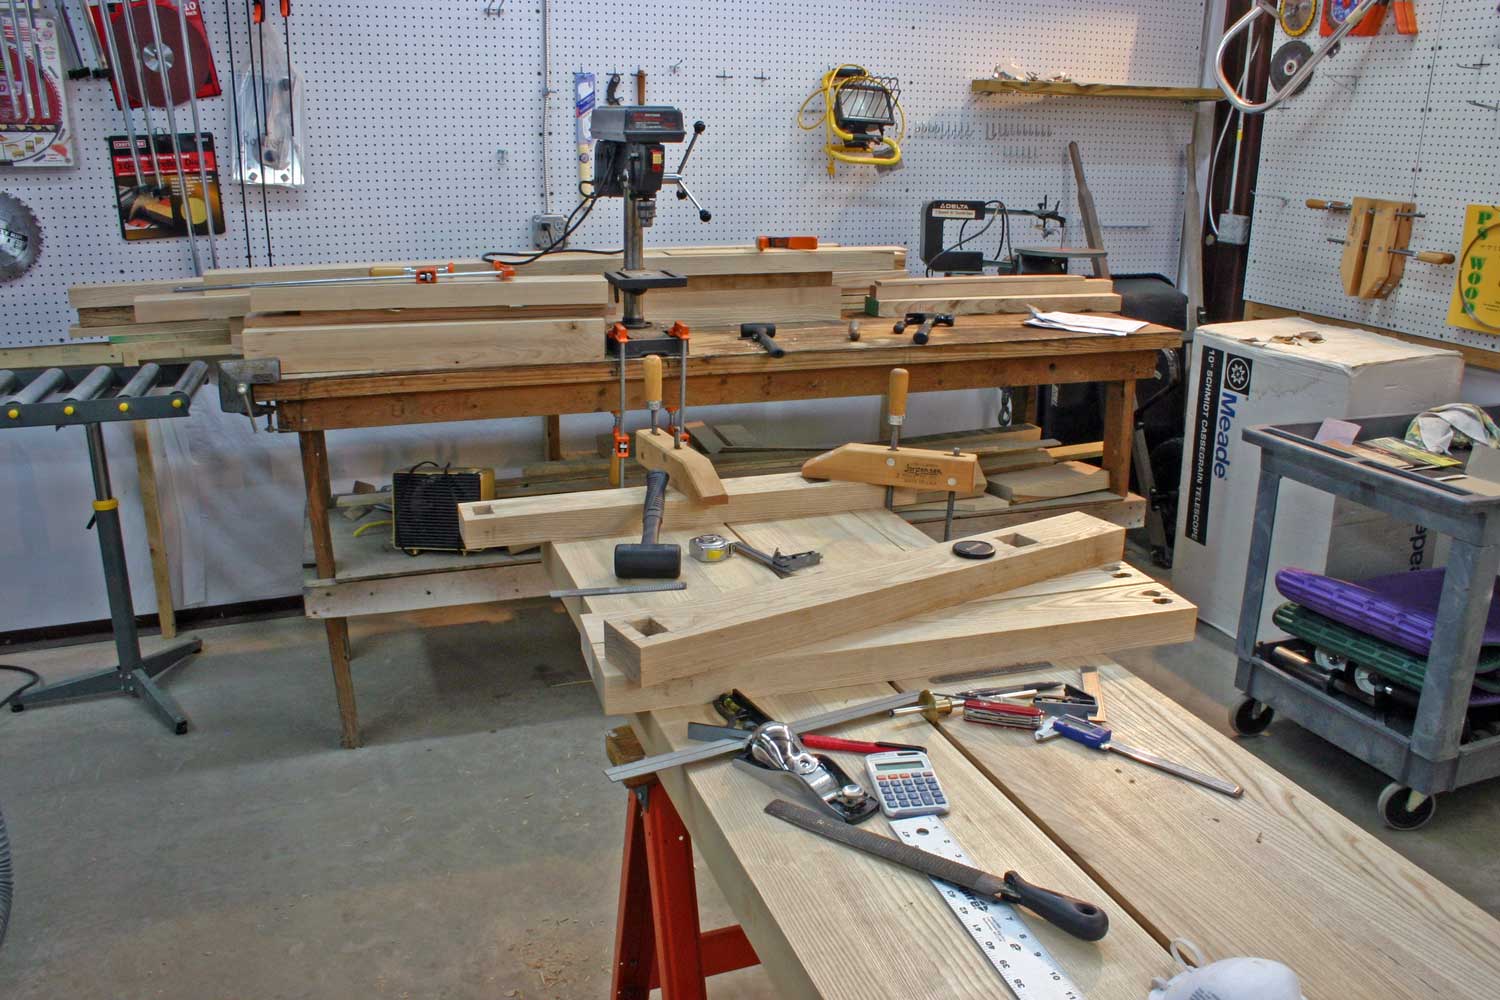 woodshop / workshop - 2nd floor of garage